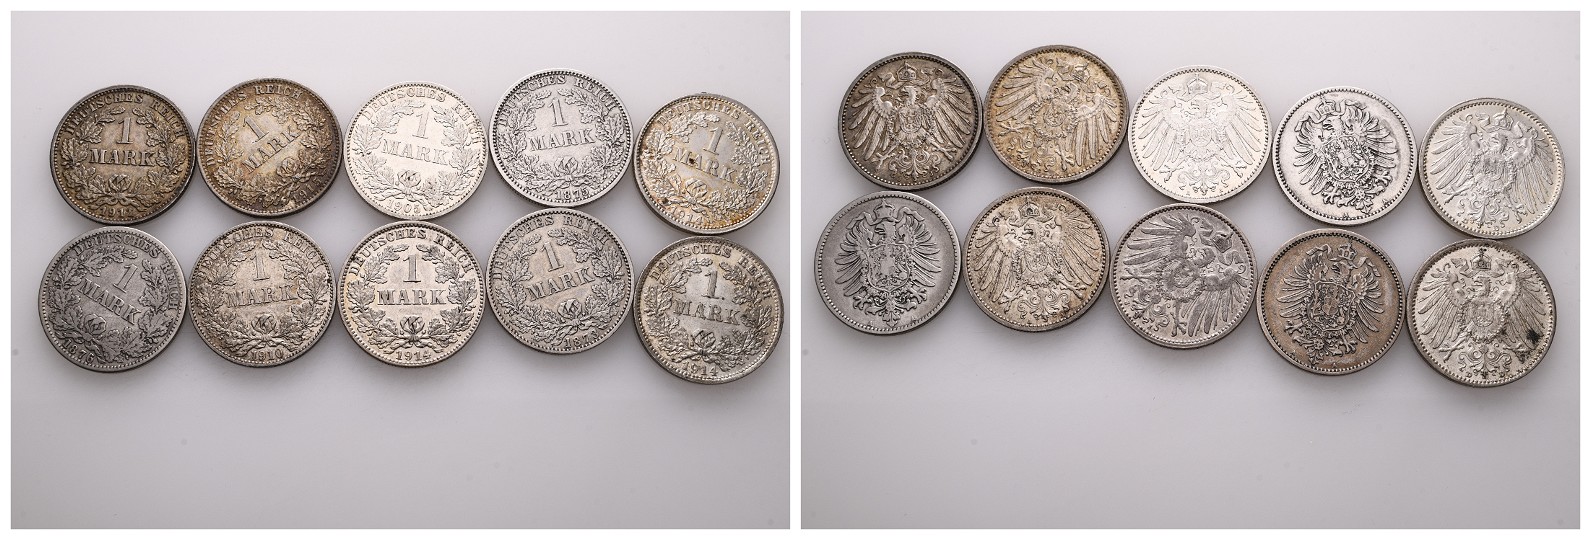  Linnartz Frankreich 20 Francs 1850 Gewicht: 6,45g/900er   